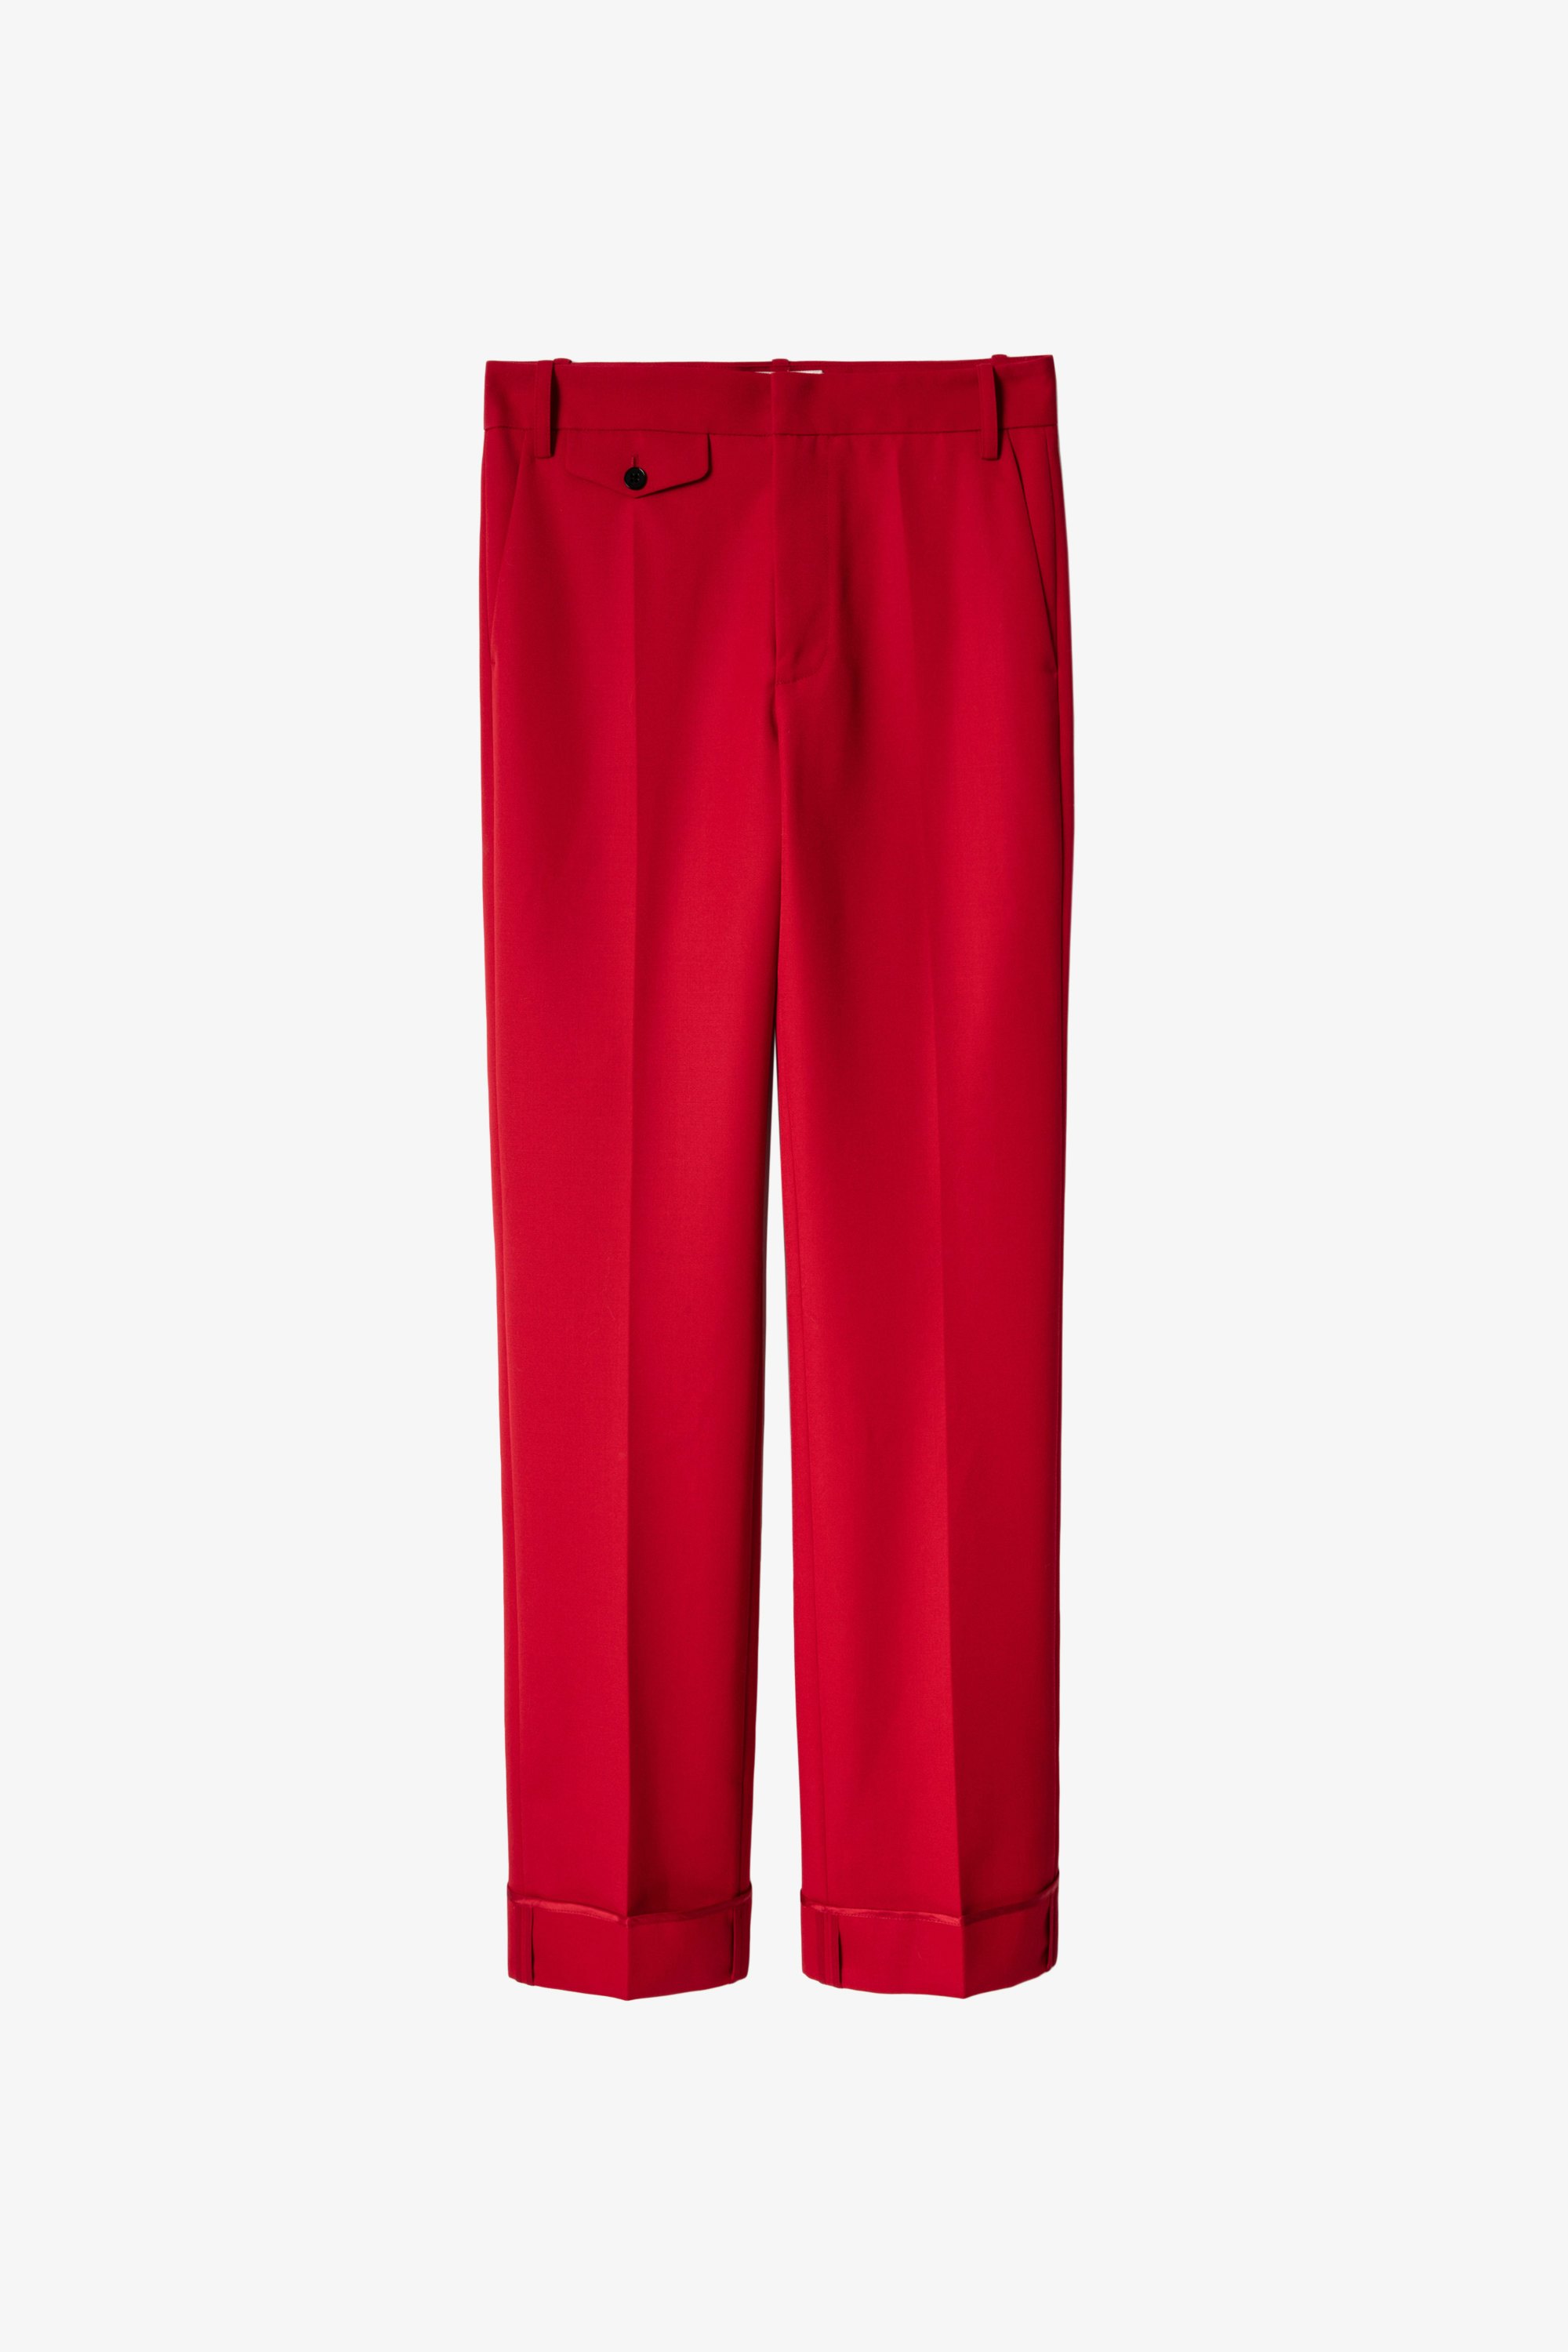 Poetia パンツ Women’s red gabardine trousers